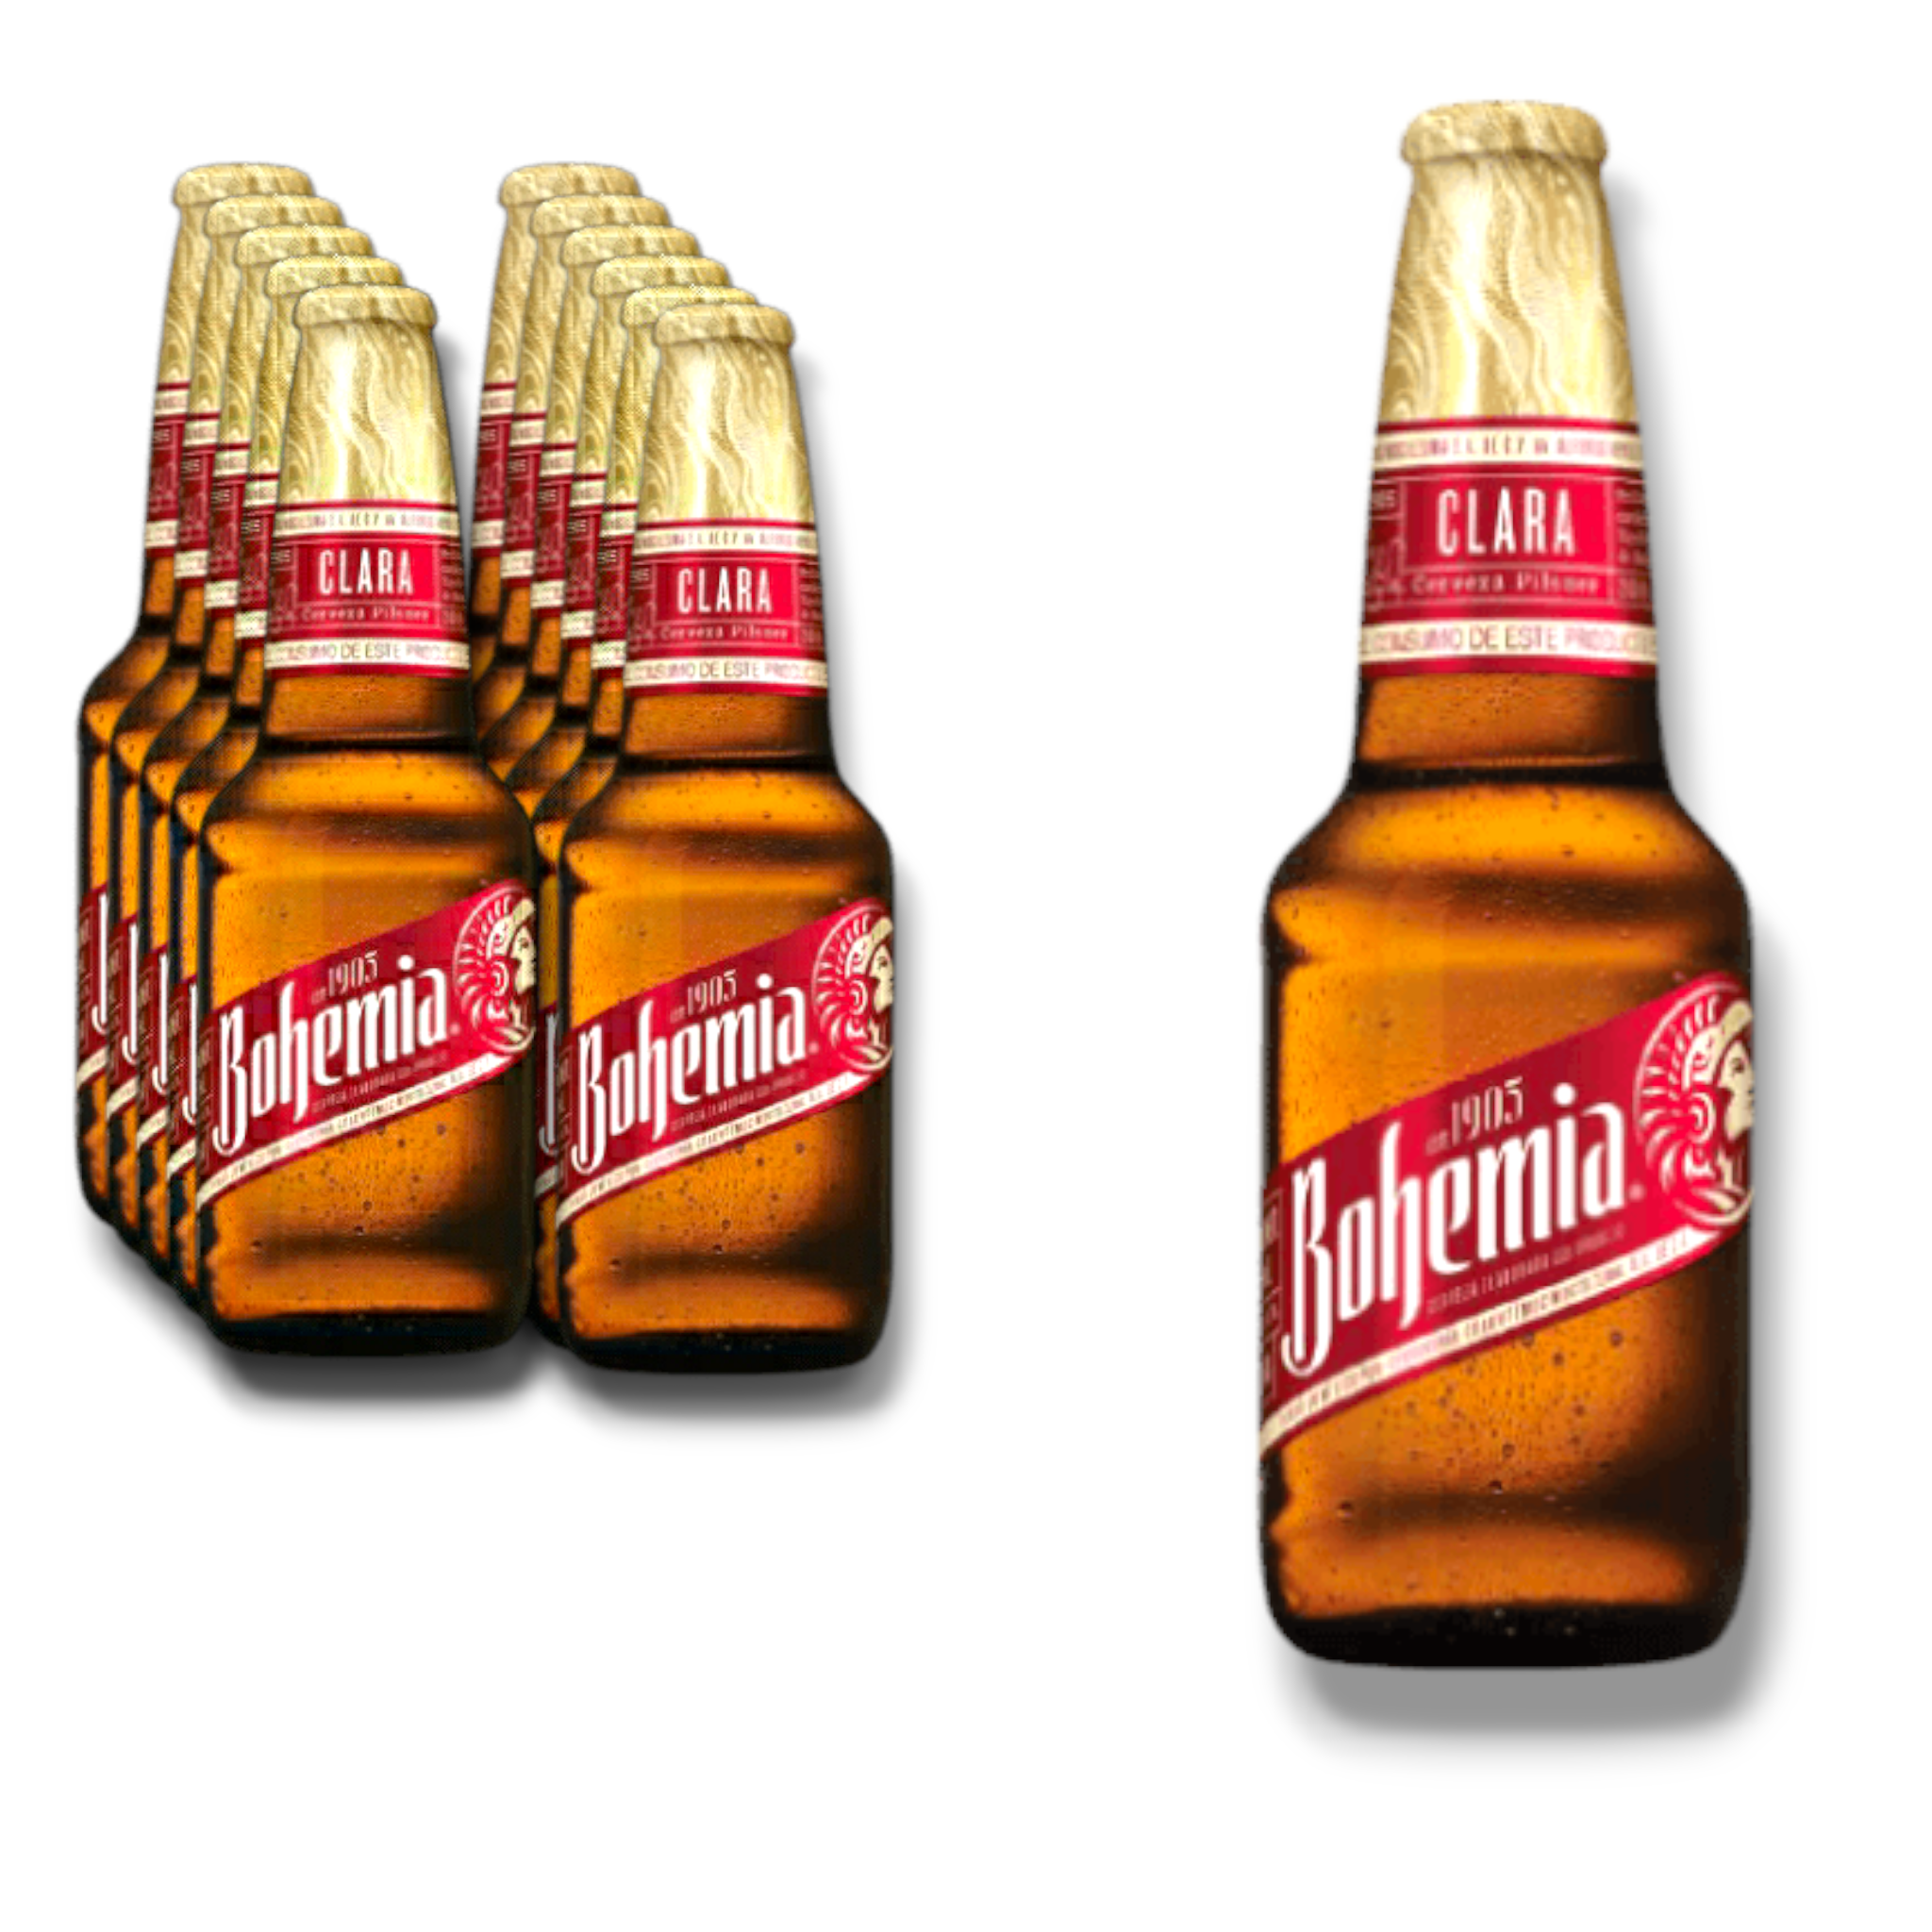 Cerveza Bohemia Clara Helles Bier 0,355l-  Mexico mit 4,7% Vol.